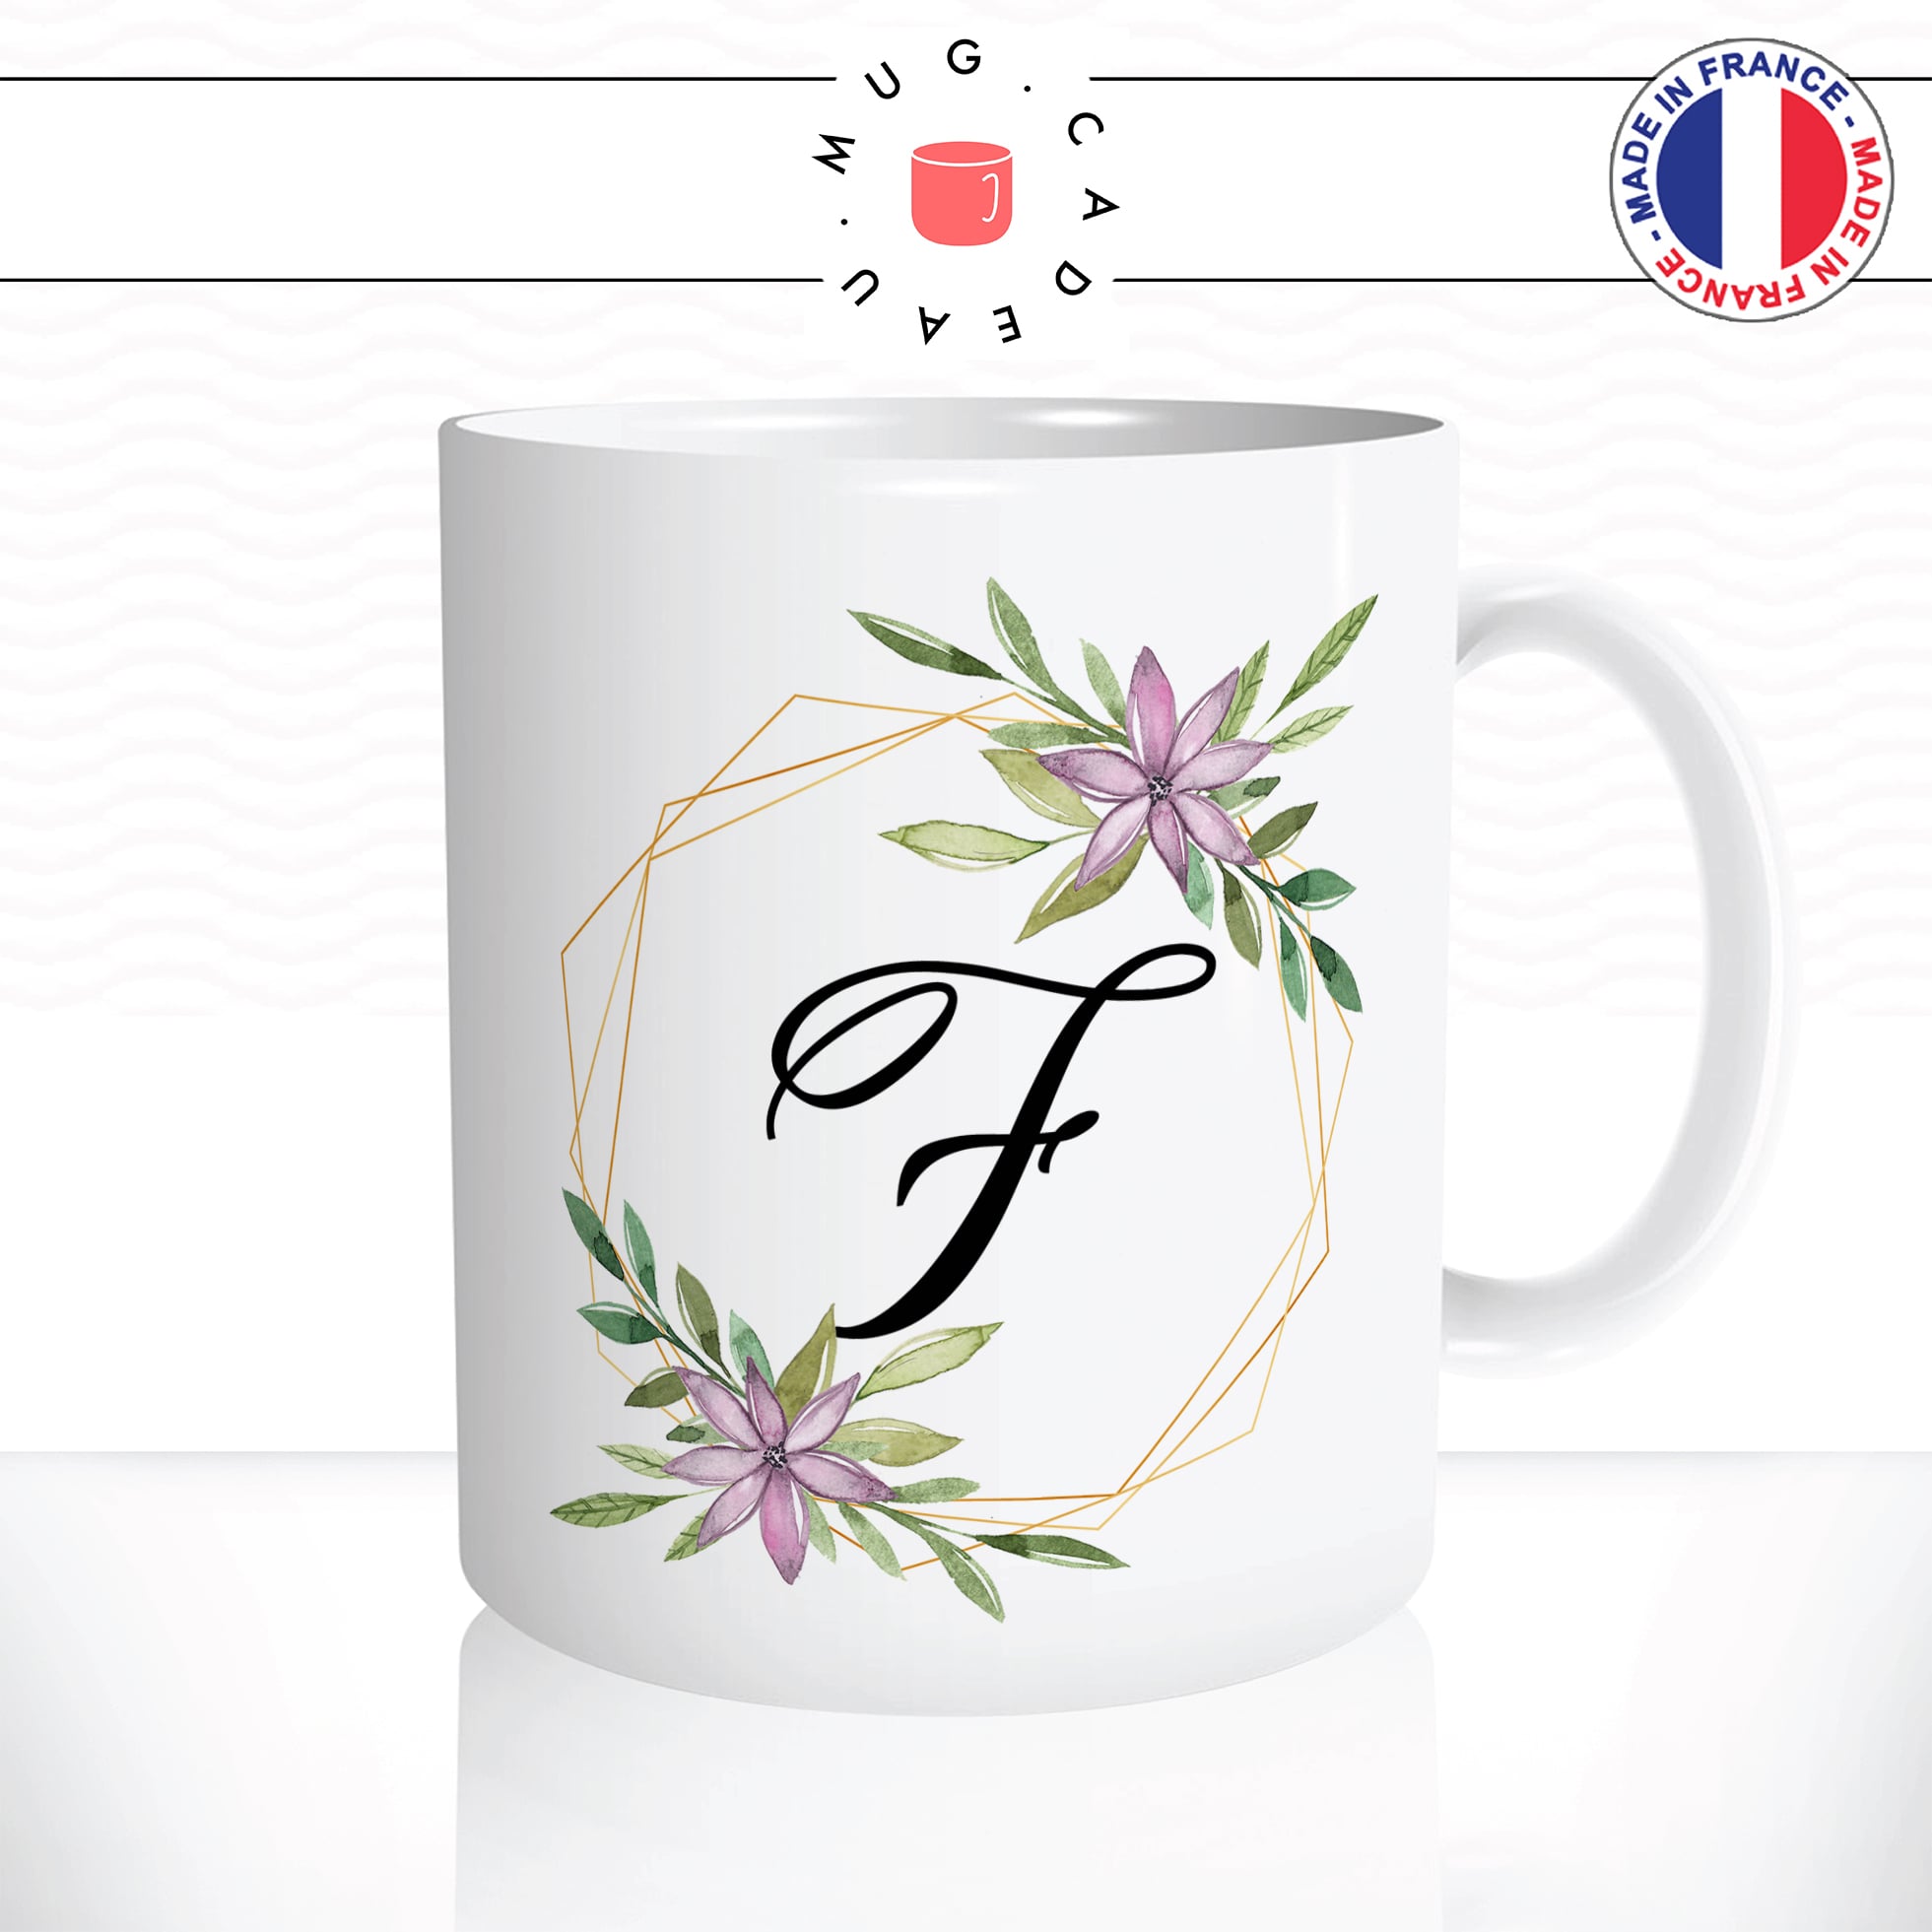 mug-tasse-initiale-fleurs-prénom-nom-lettre-f-flower-fun-matin-café-thé-mugs-tasses-idée-cadeau-original-personnalisée2-min